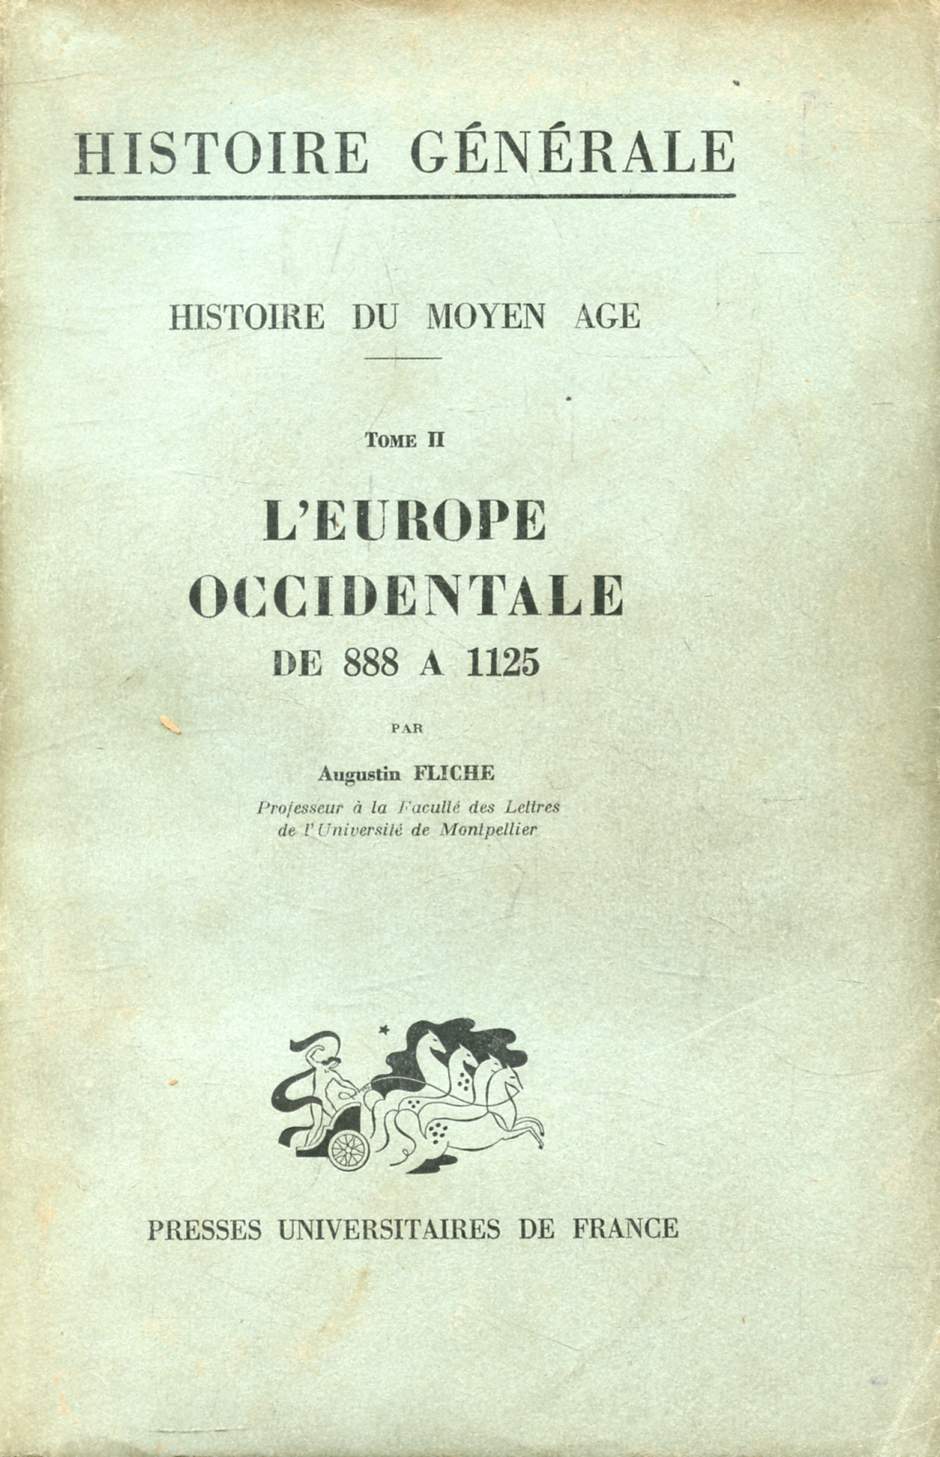 HISTOIRE DU MOYEN AGE, TOME II, L'EUROPE OCCIDENTALE DE 888 A 1125